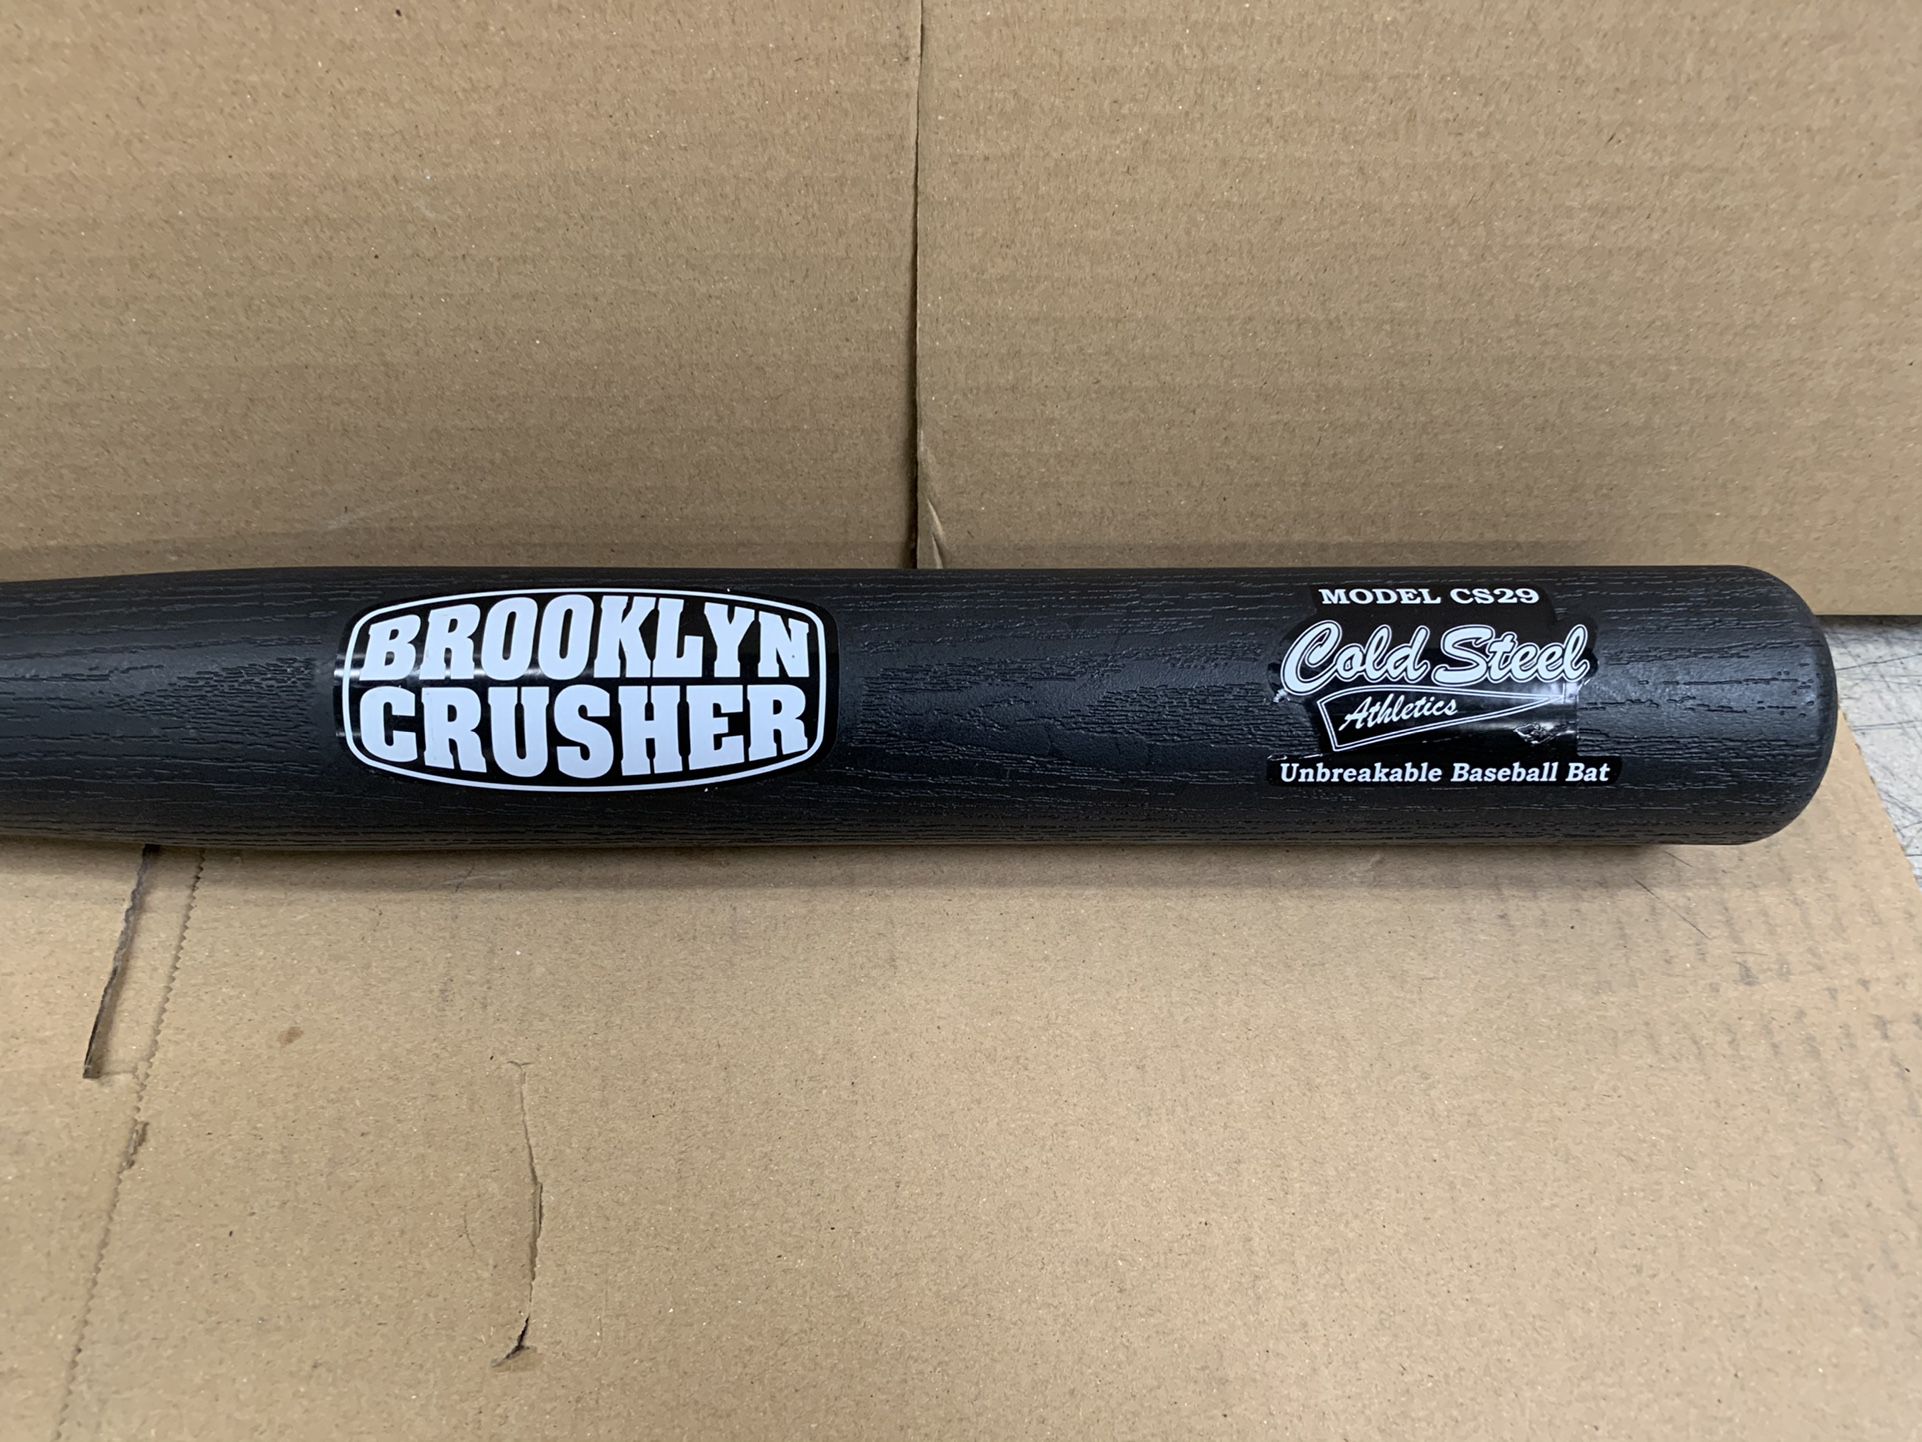 Brooklyn Basher - Baseball bat - Cold Steel